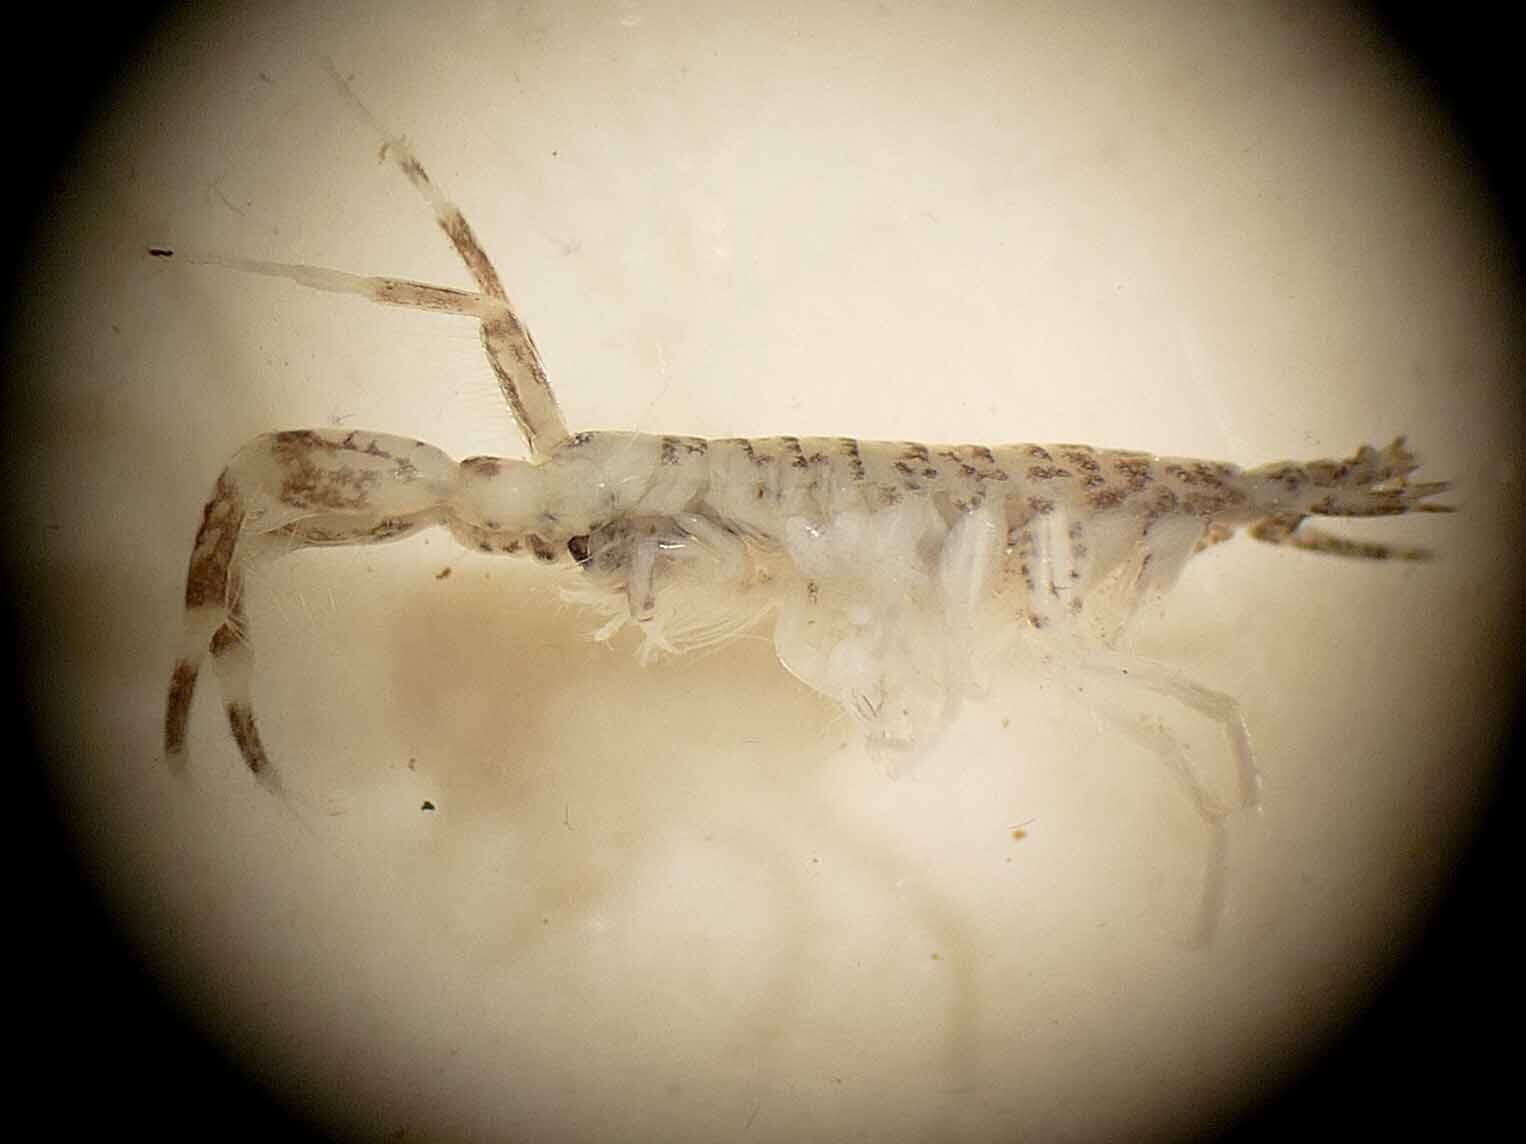 Image of Caspian mud shrimp